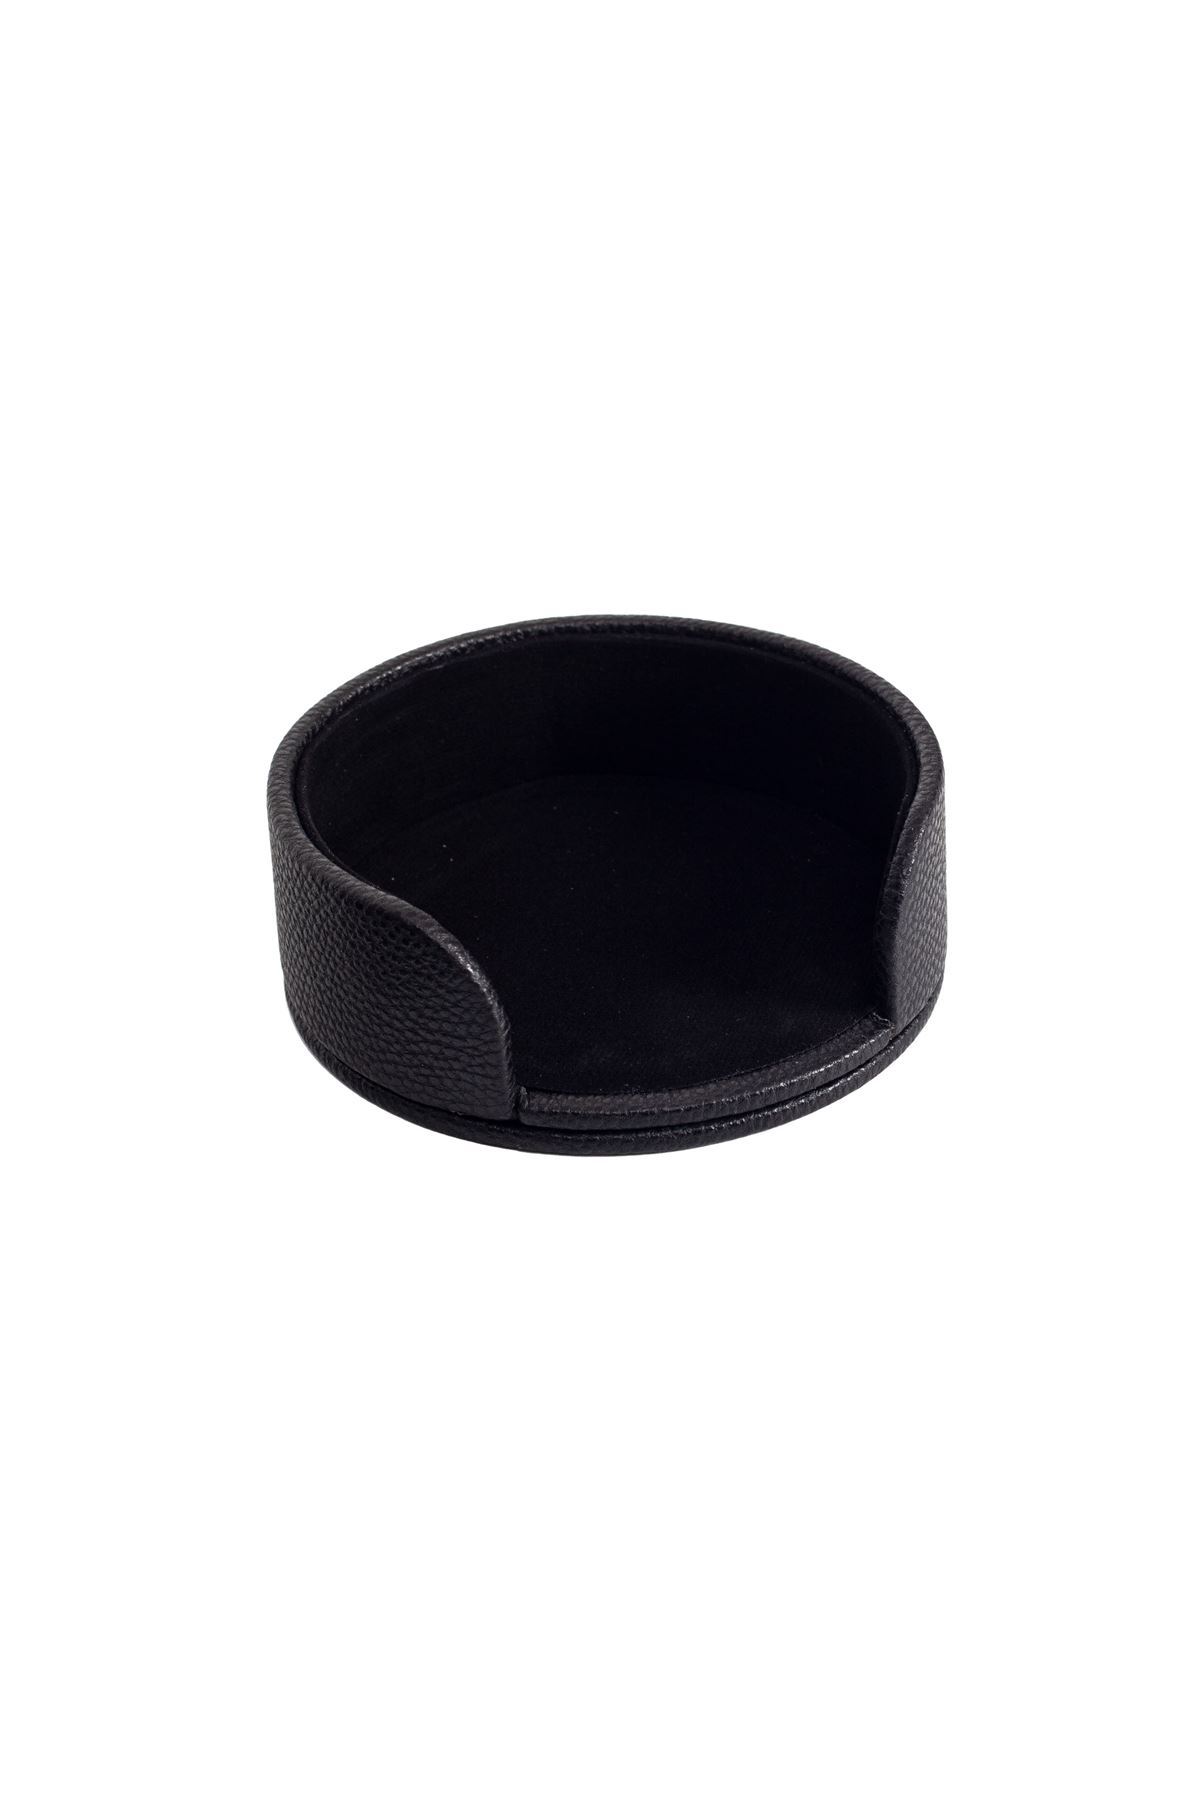 Leather Oval Coaster Black